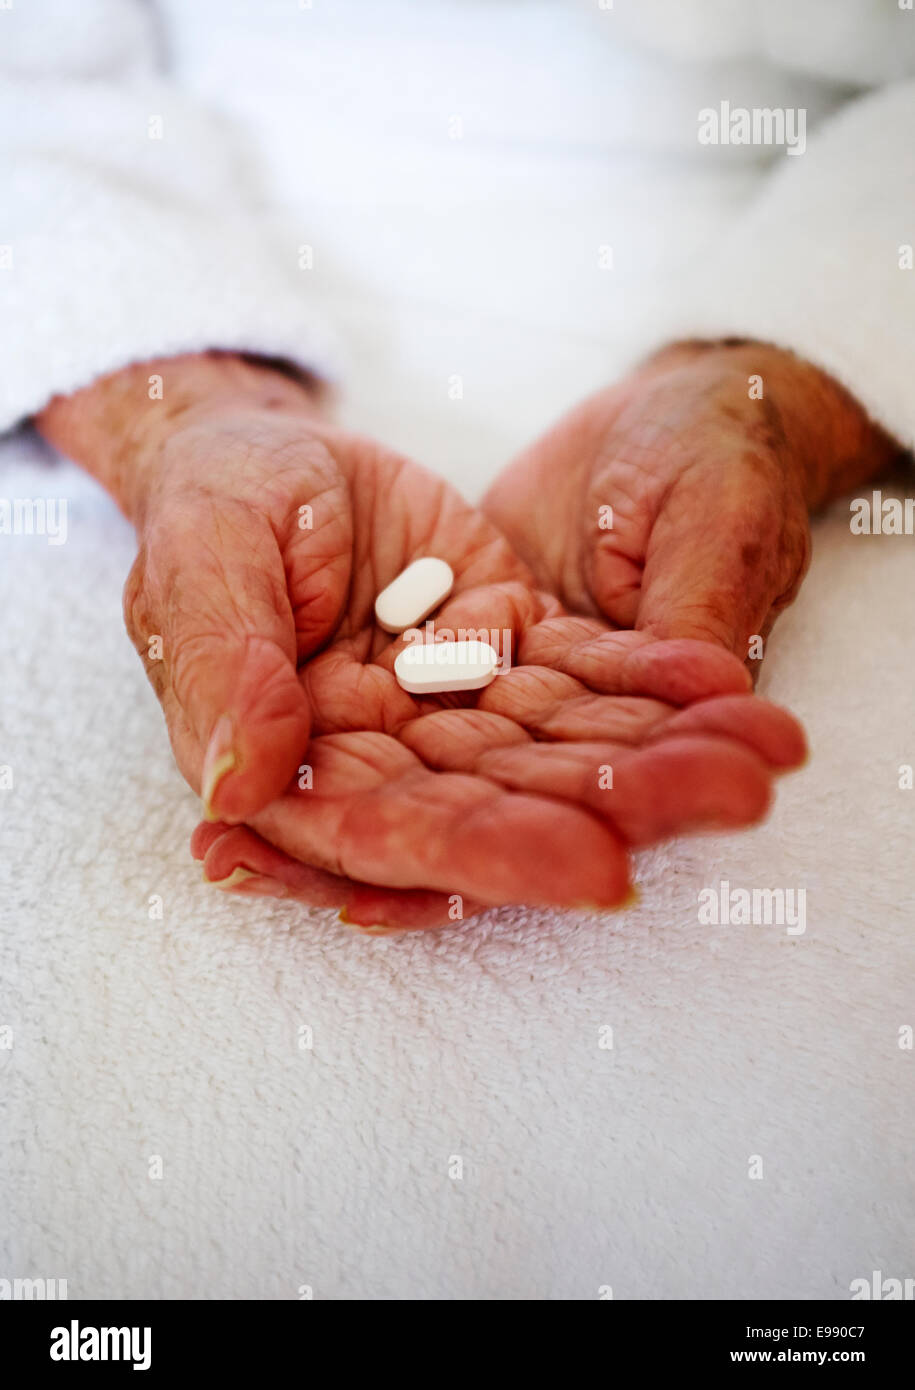 Senior person's hands holding medication - nursing home healthcare. Stock Photo